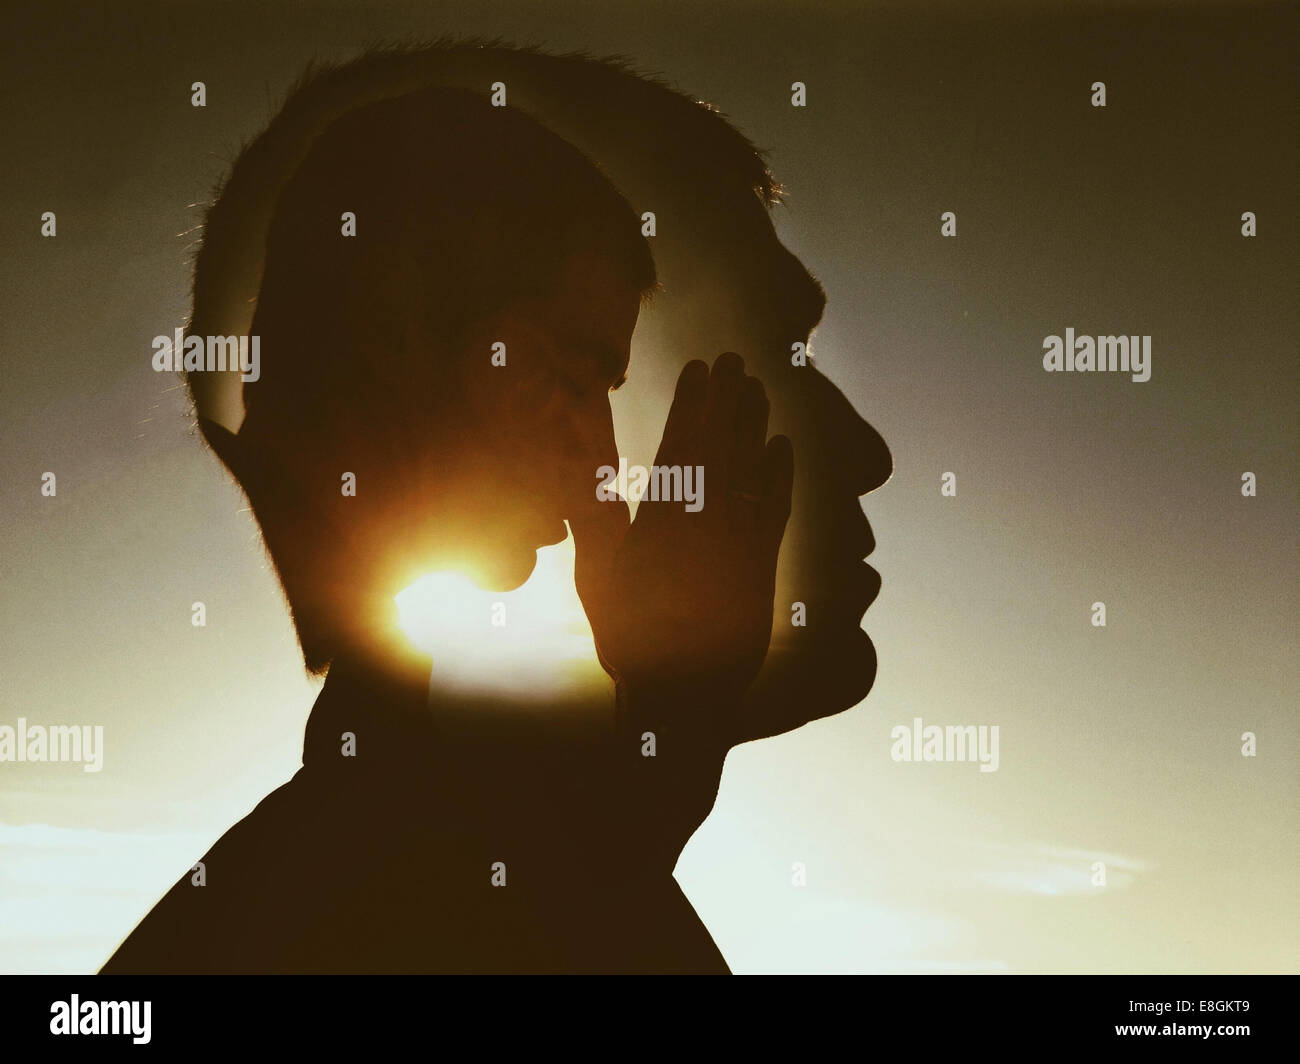 Digital composite of man praying inside a man's head Stock Photo